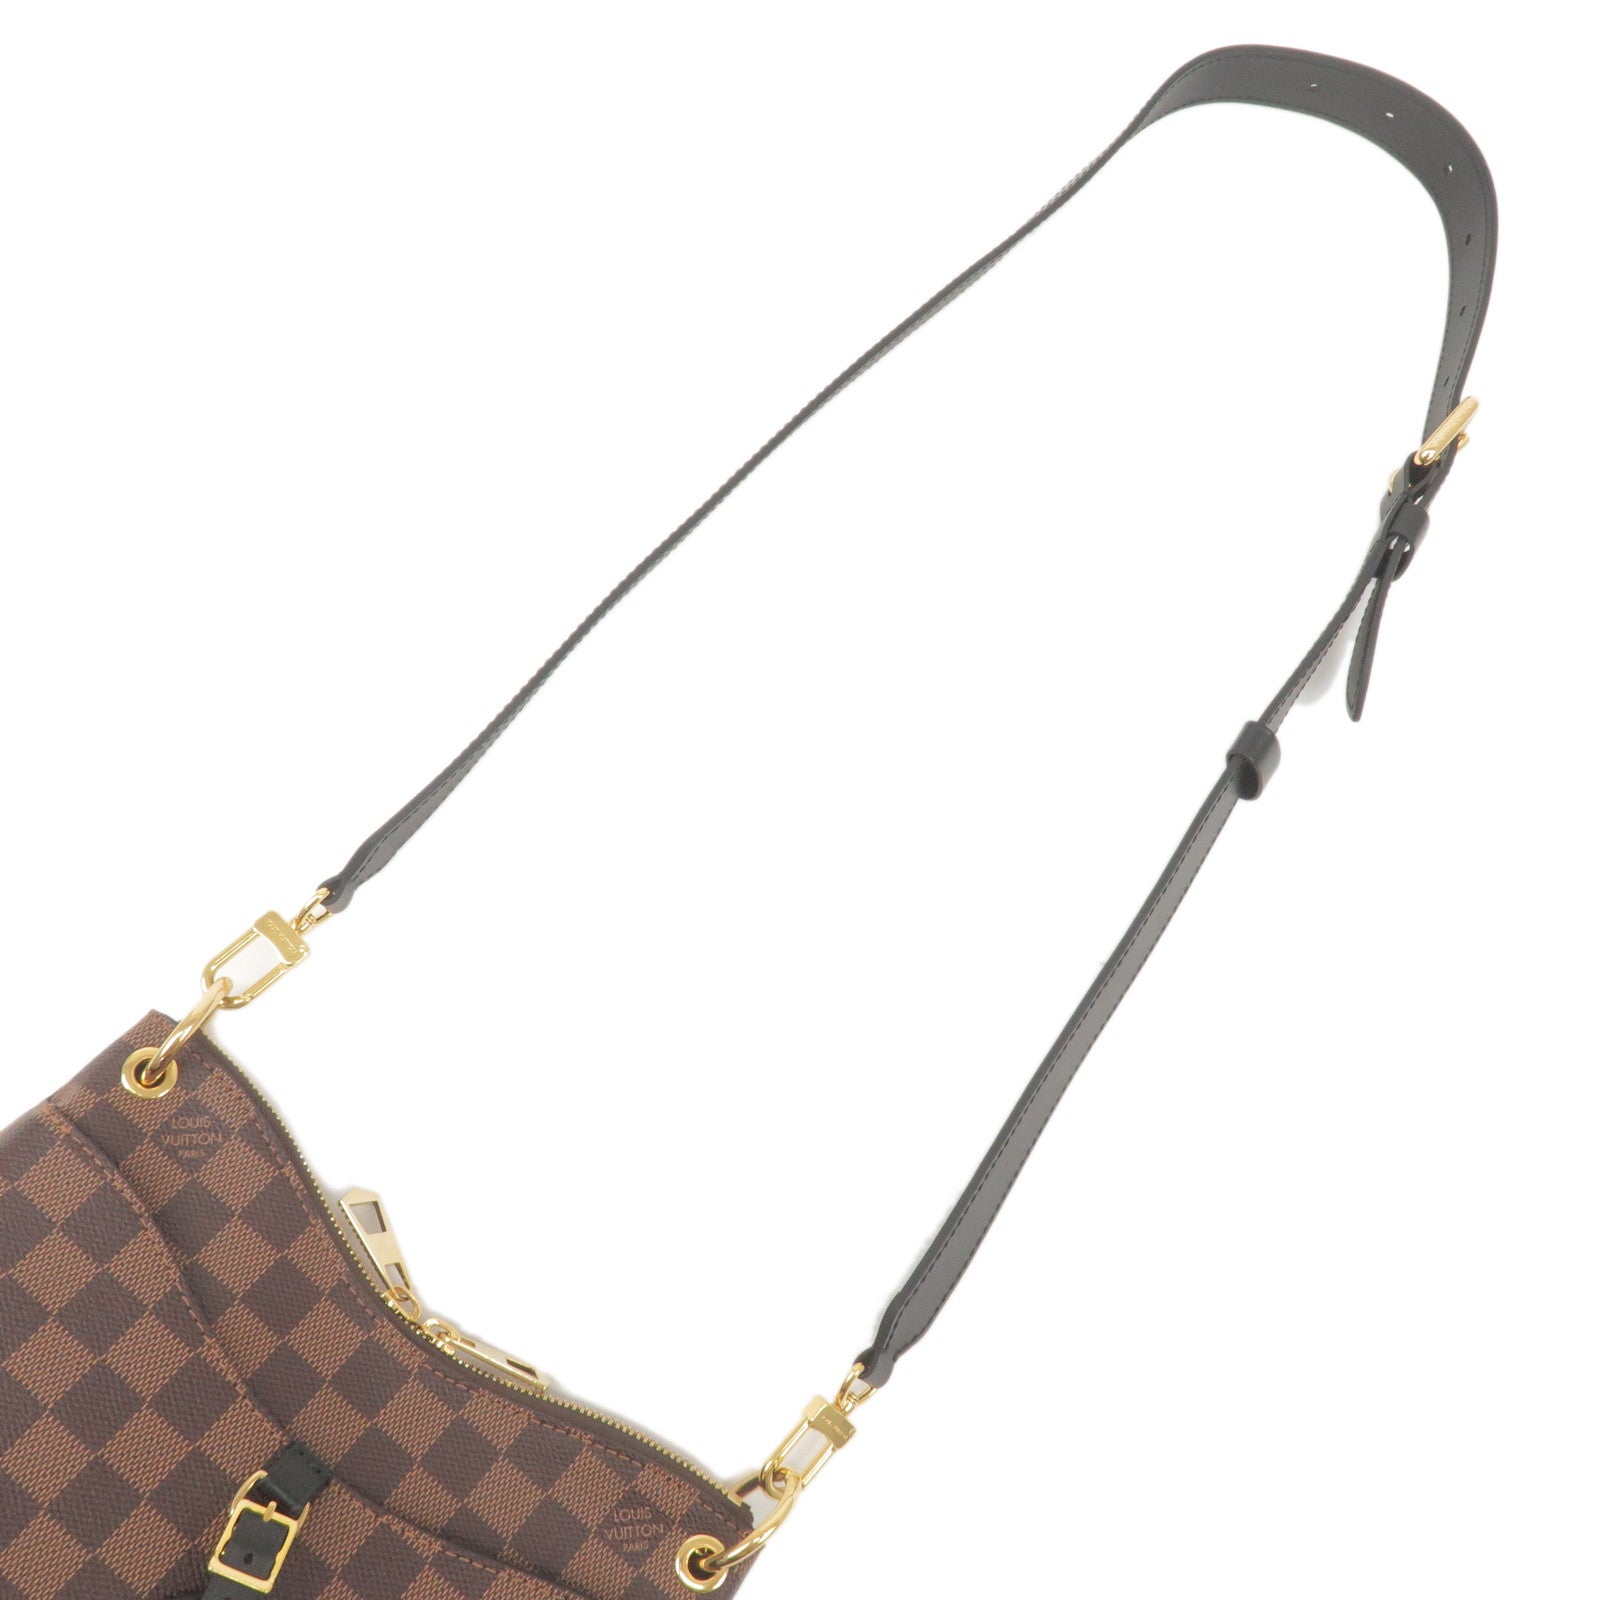 Louis Vuitton Odeon PM Damier Ebene Canvas and Leather Handbag